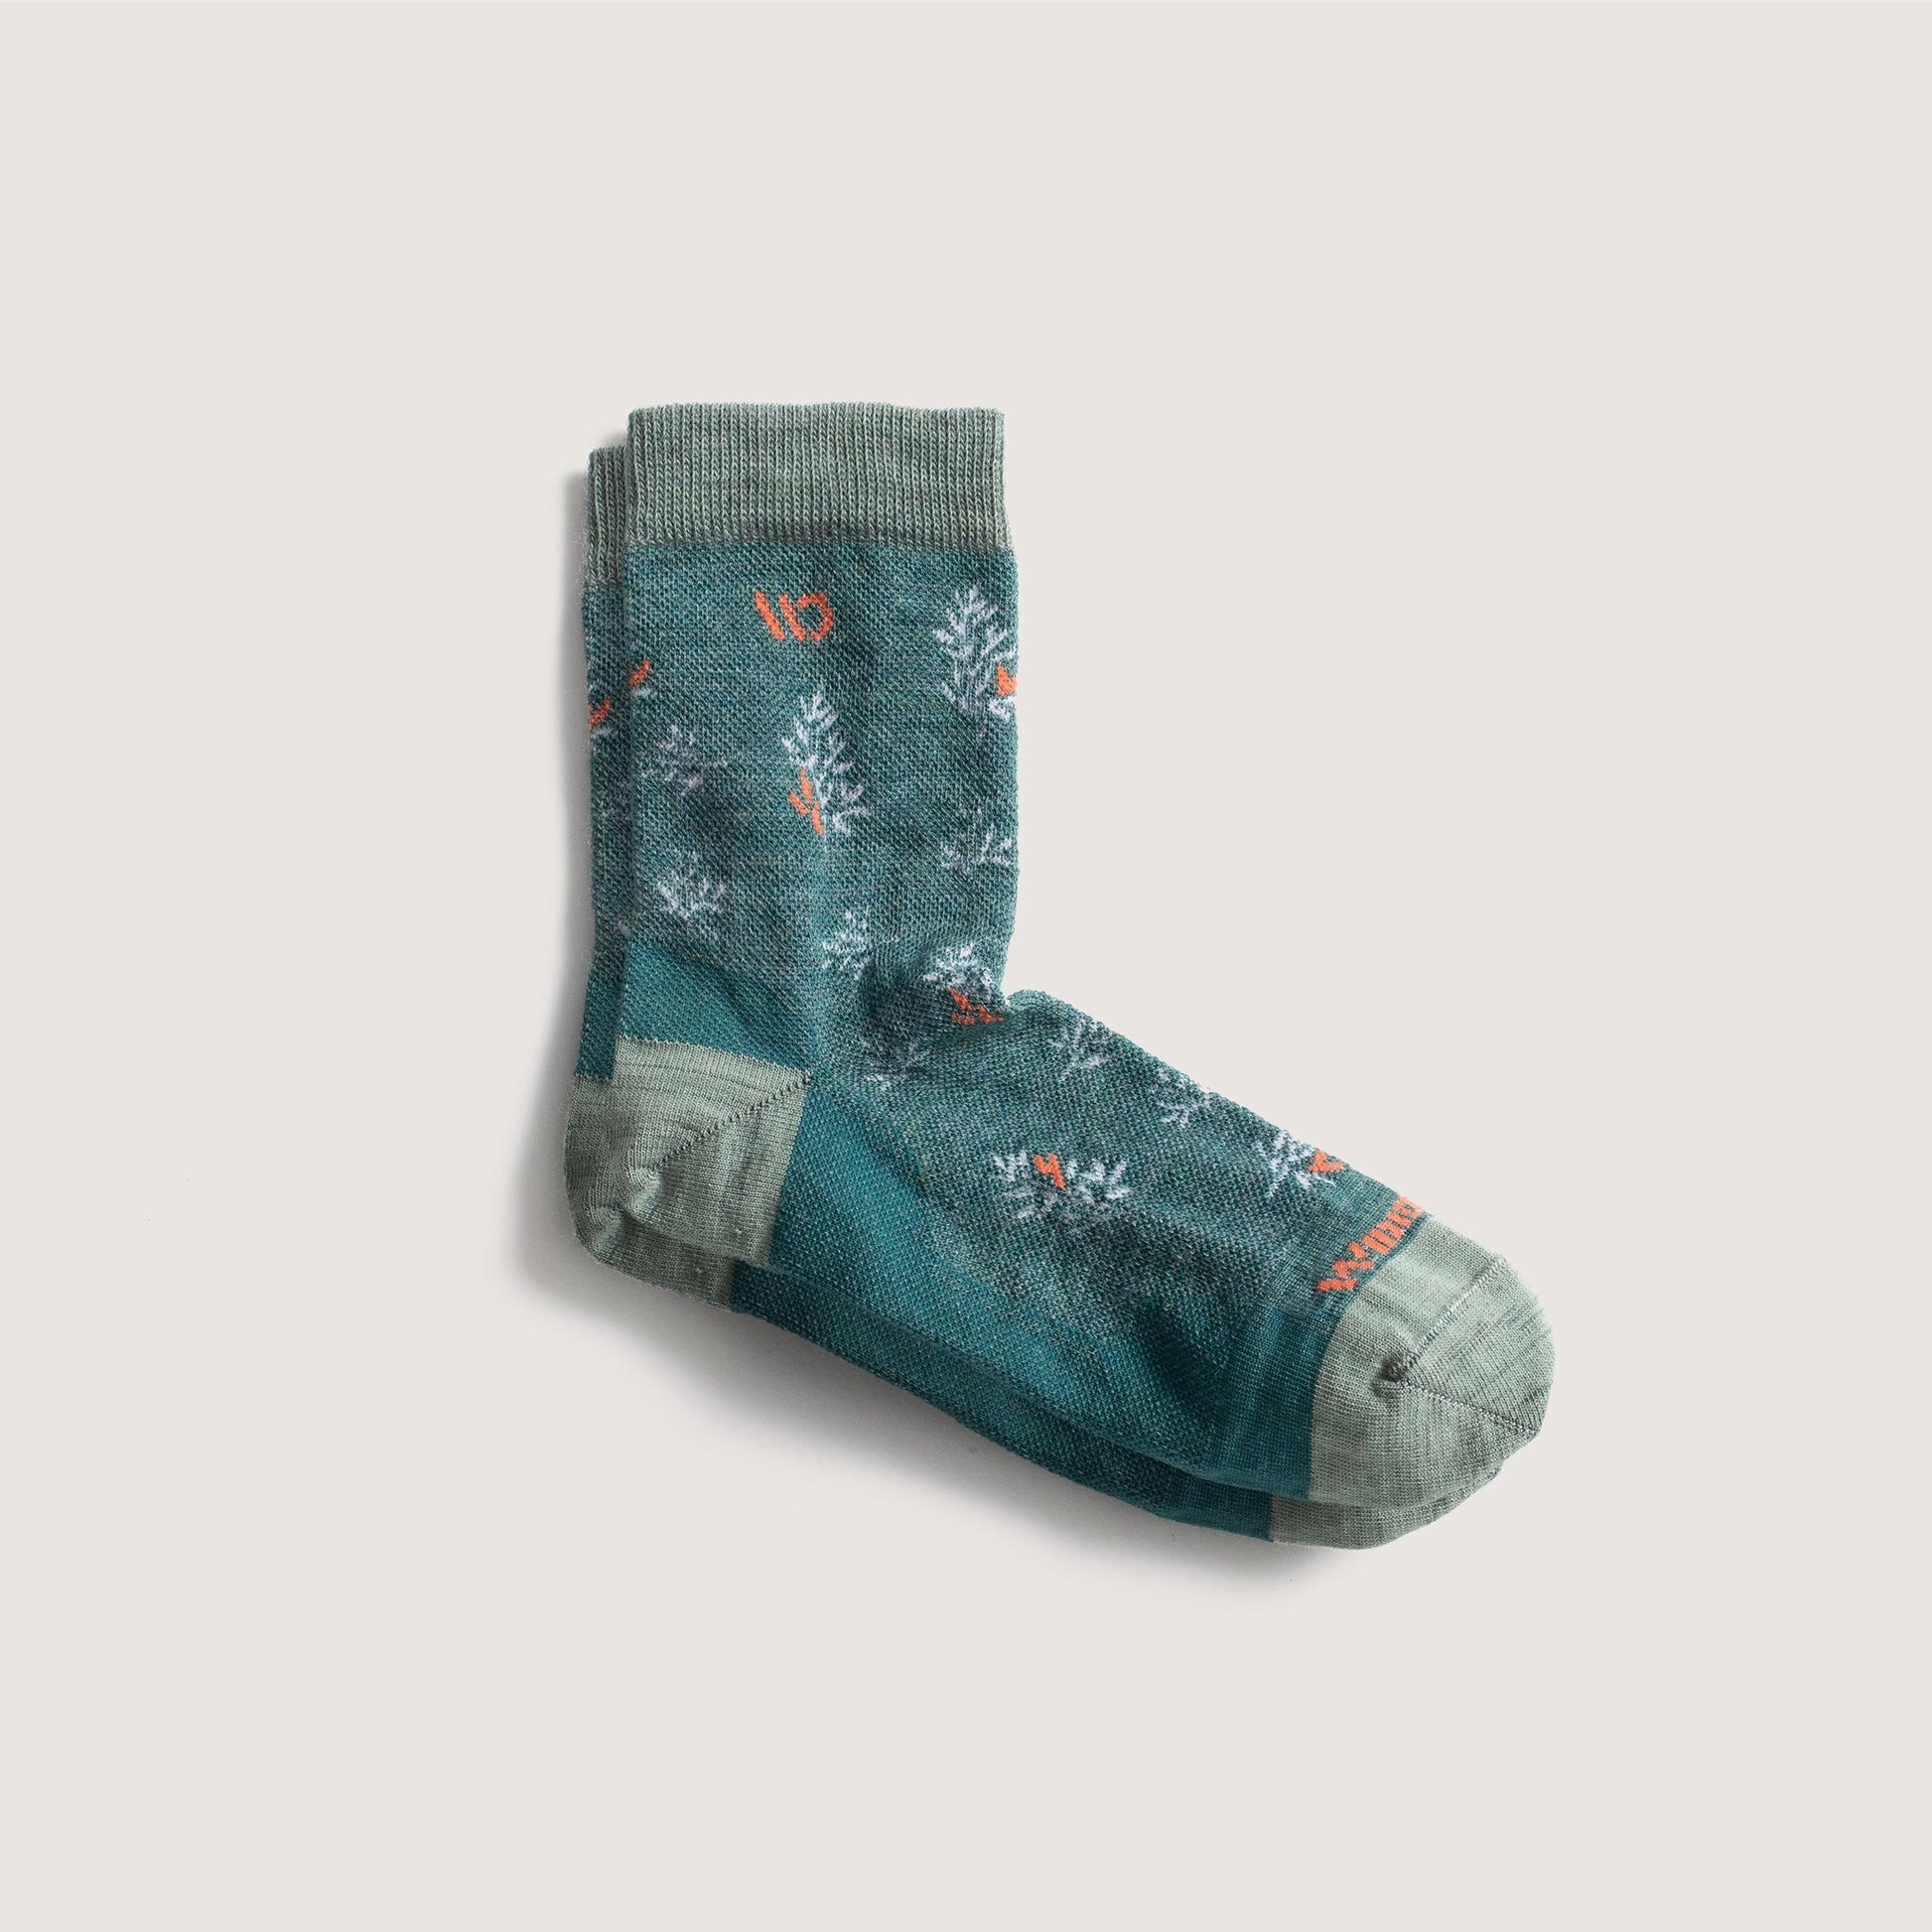 Flat socks featuring seafoam heel/toe/cuff, teal body, orange logo and white pattern--Teal/Taupe